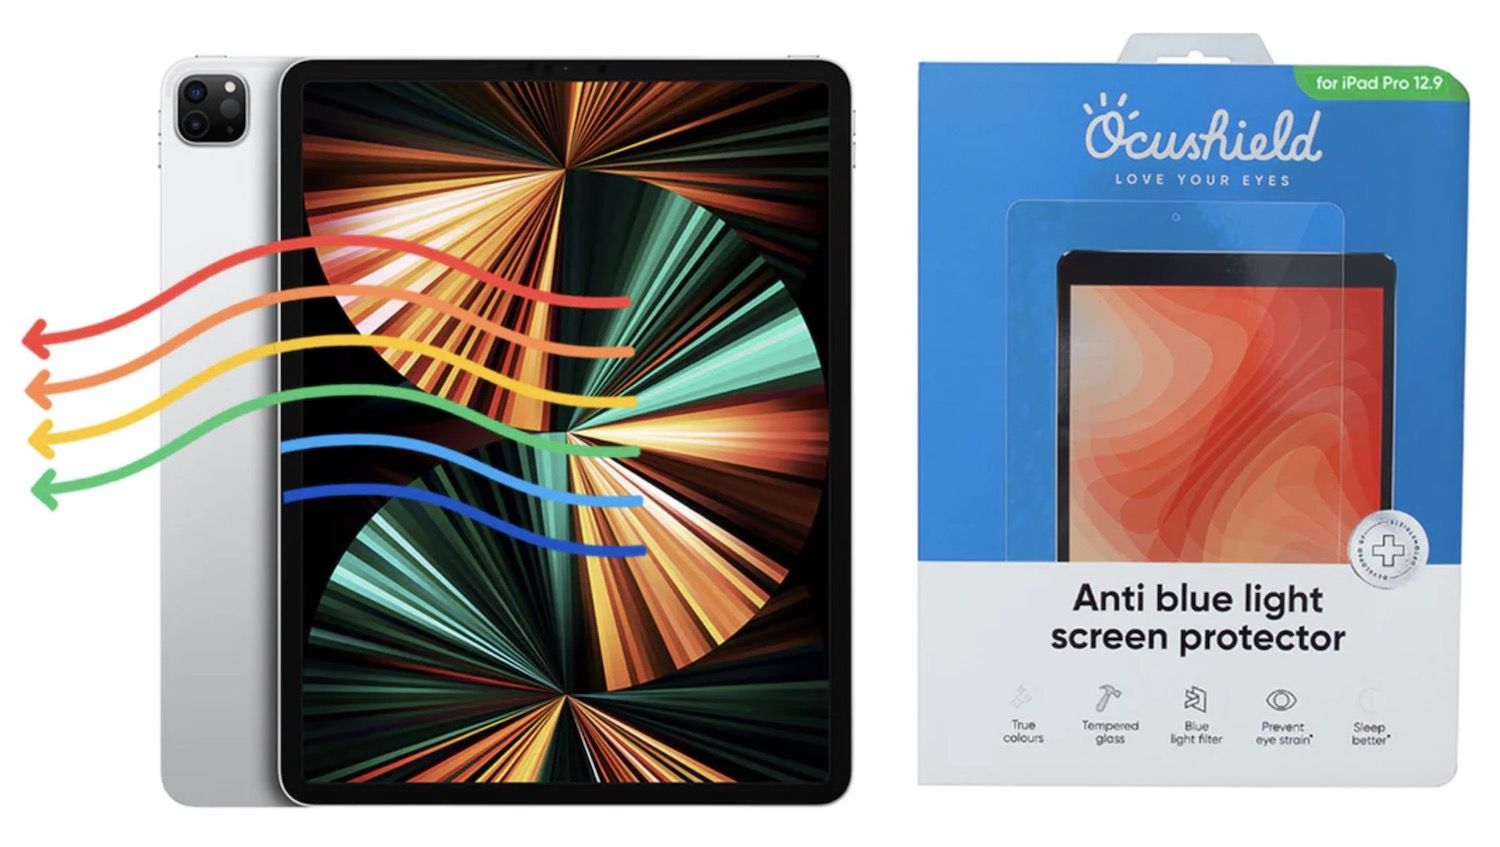 Ocushield anti-blue light screen protector for 12.9-inch iPad Pro